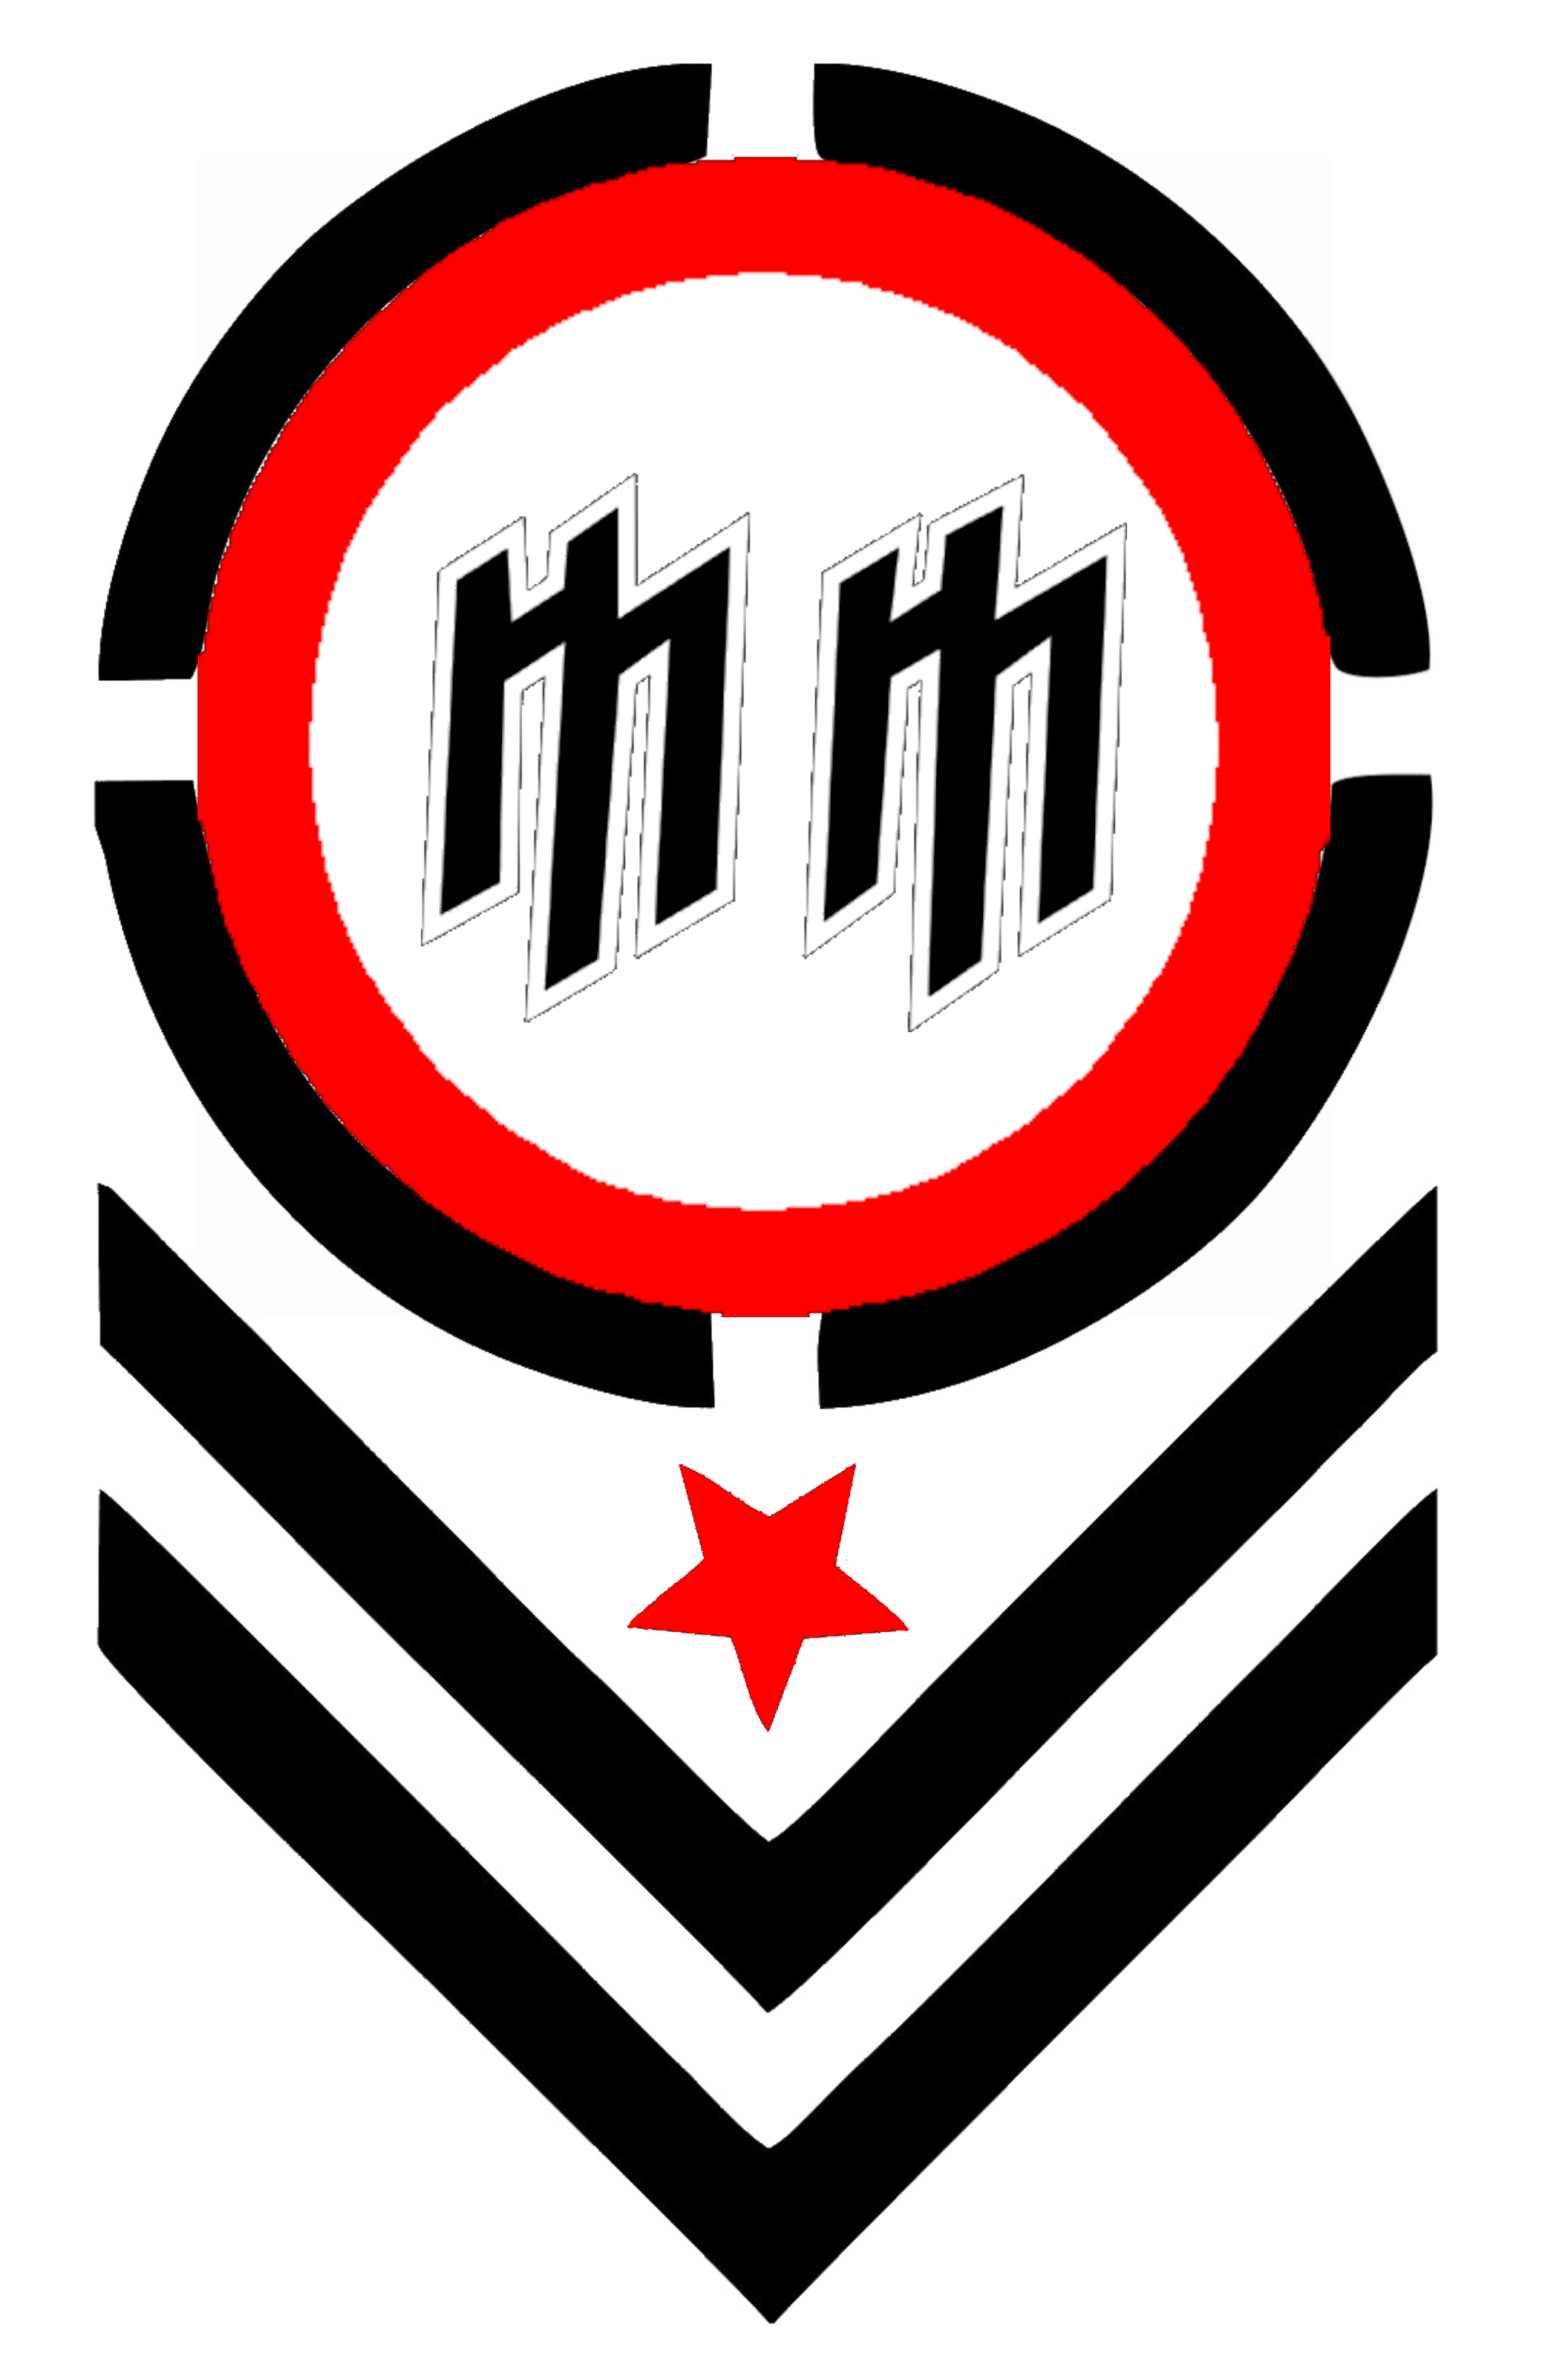 Red Archer Logo - Mm Logo Red Star. Free Image clip art online